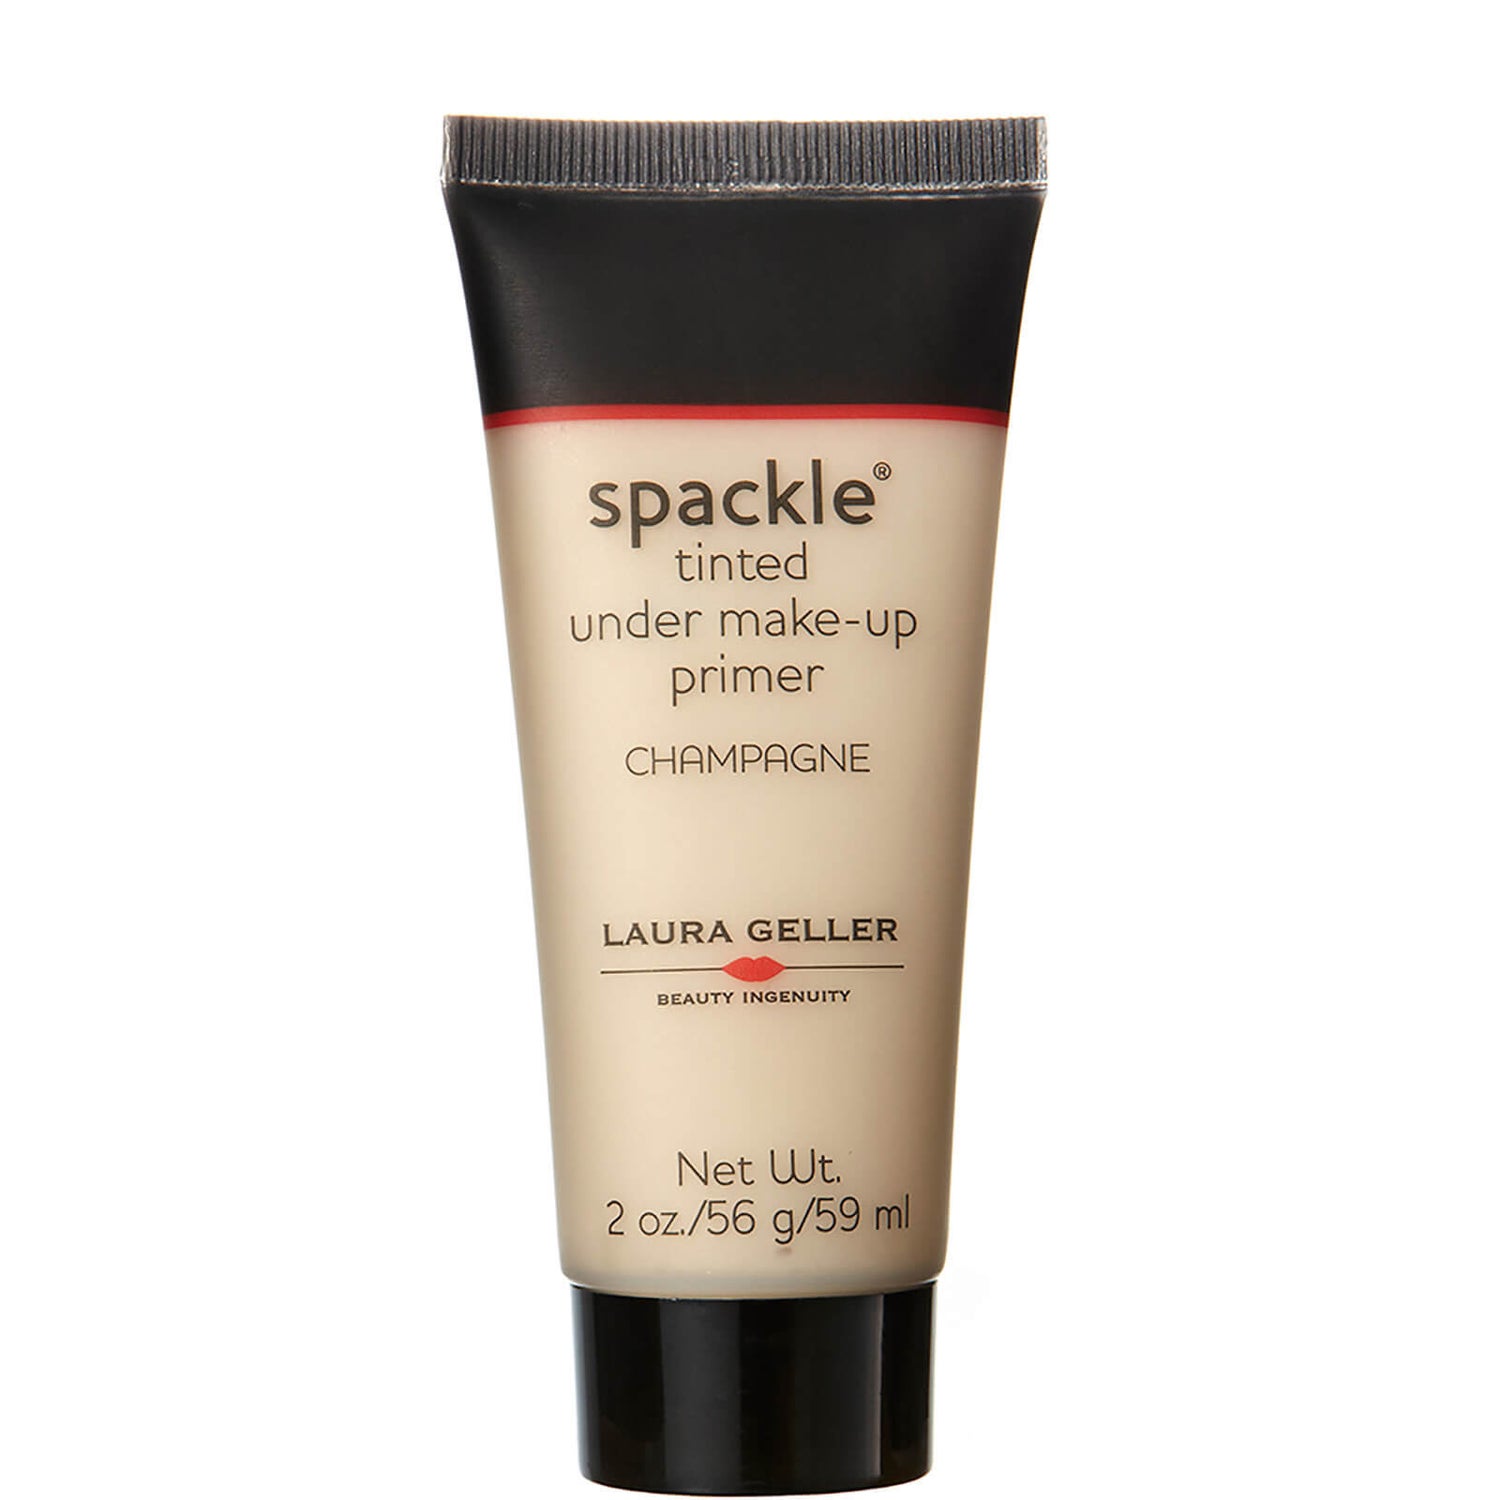 Laura Geller Spackle Under Make-Up Primer Champagne(로라 겔러 스패클 언더 메이크업 프라이머 샴페인 59ml)